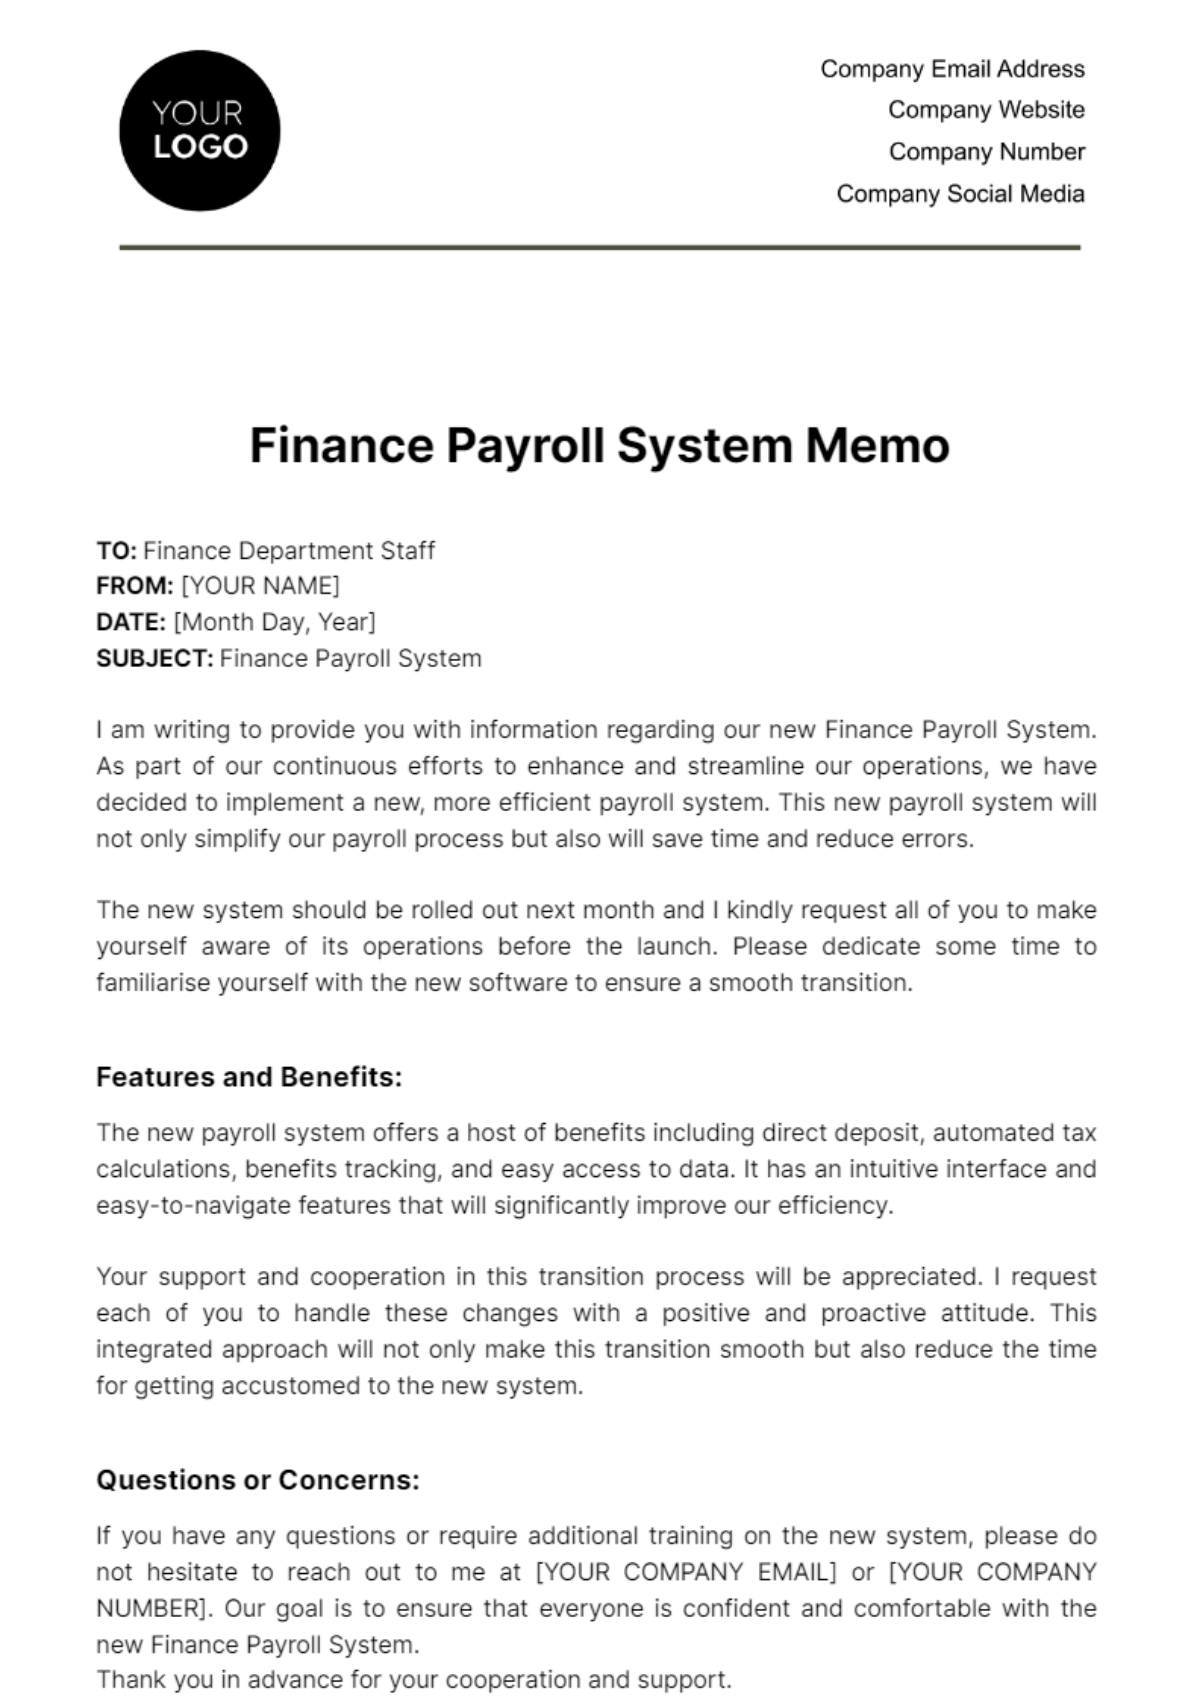 Finance Payroll System Memo Template